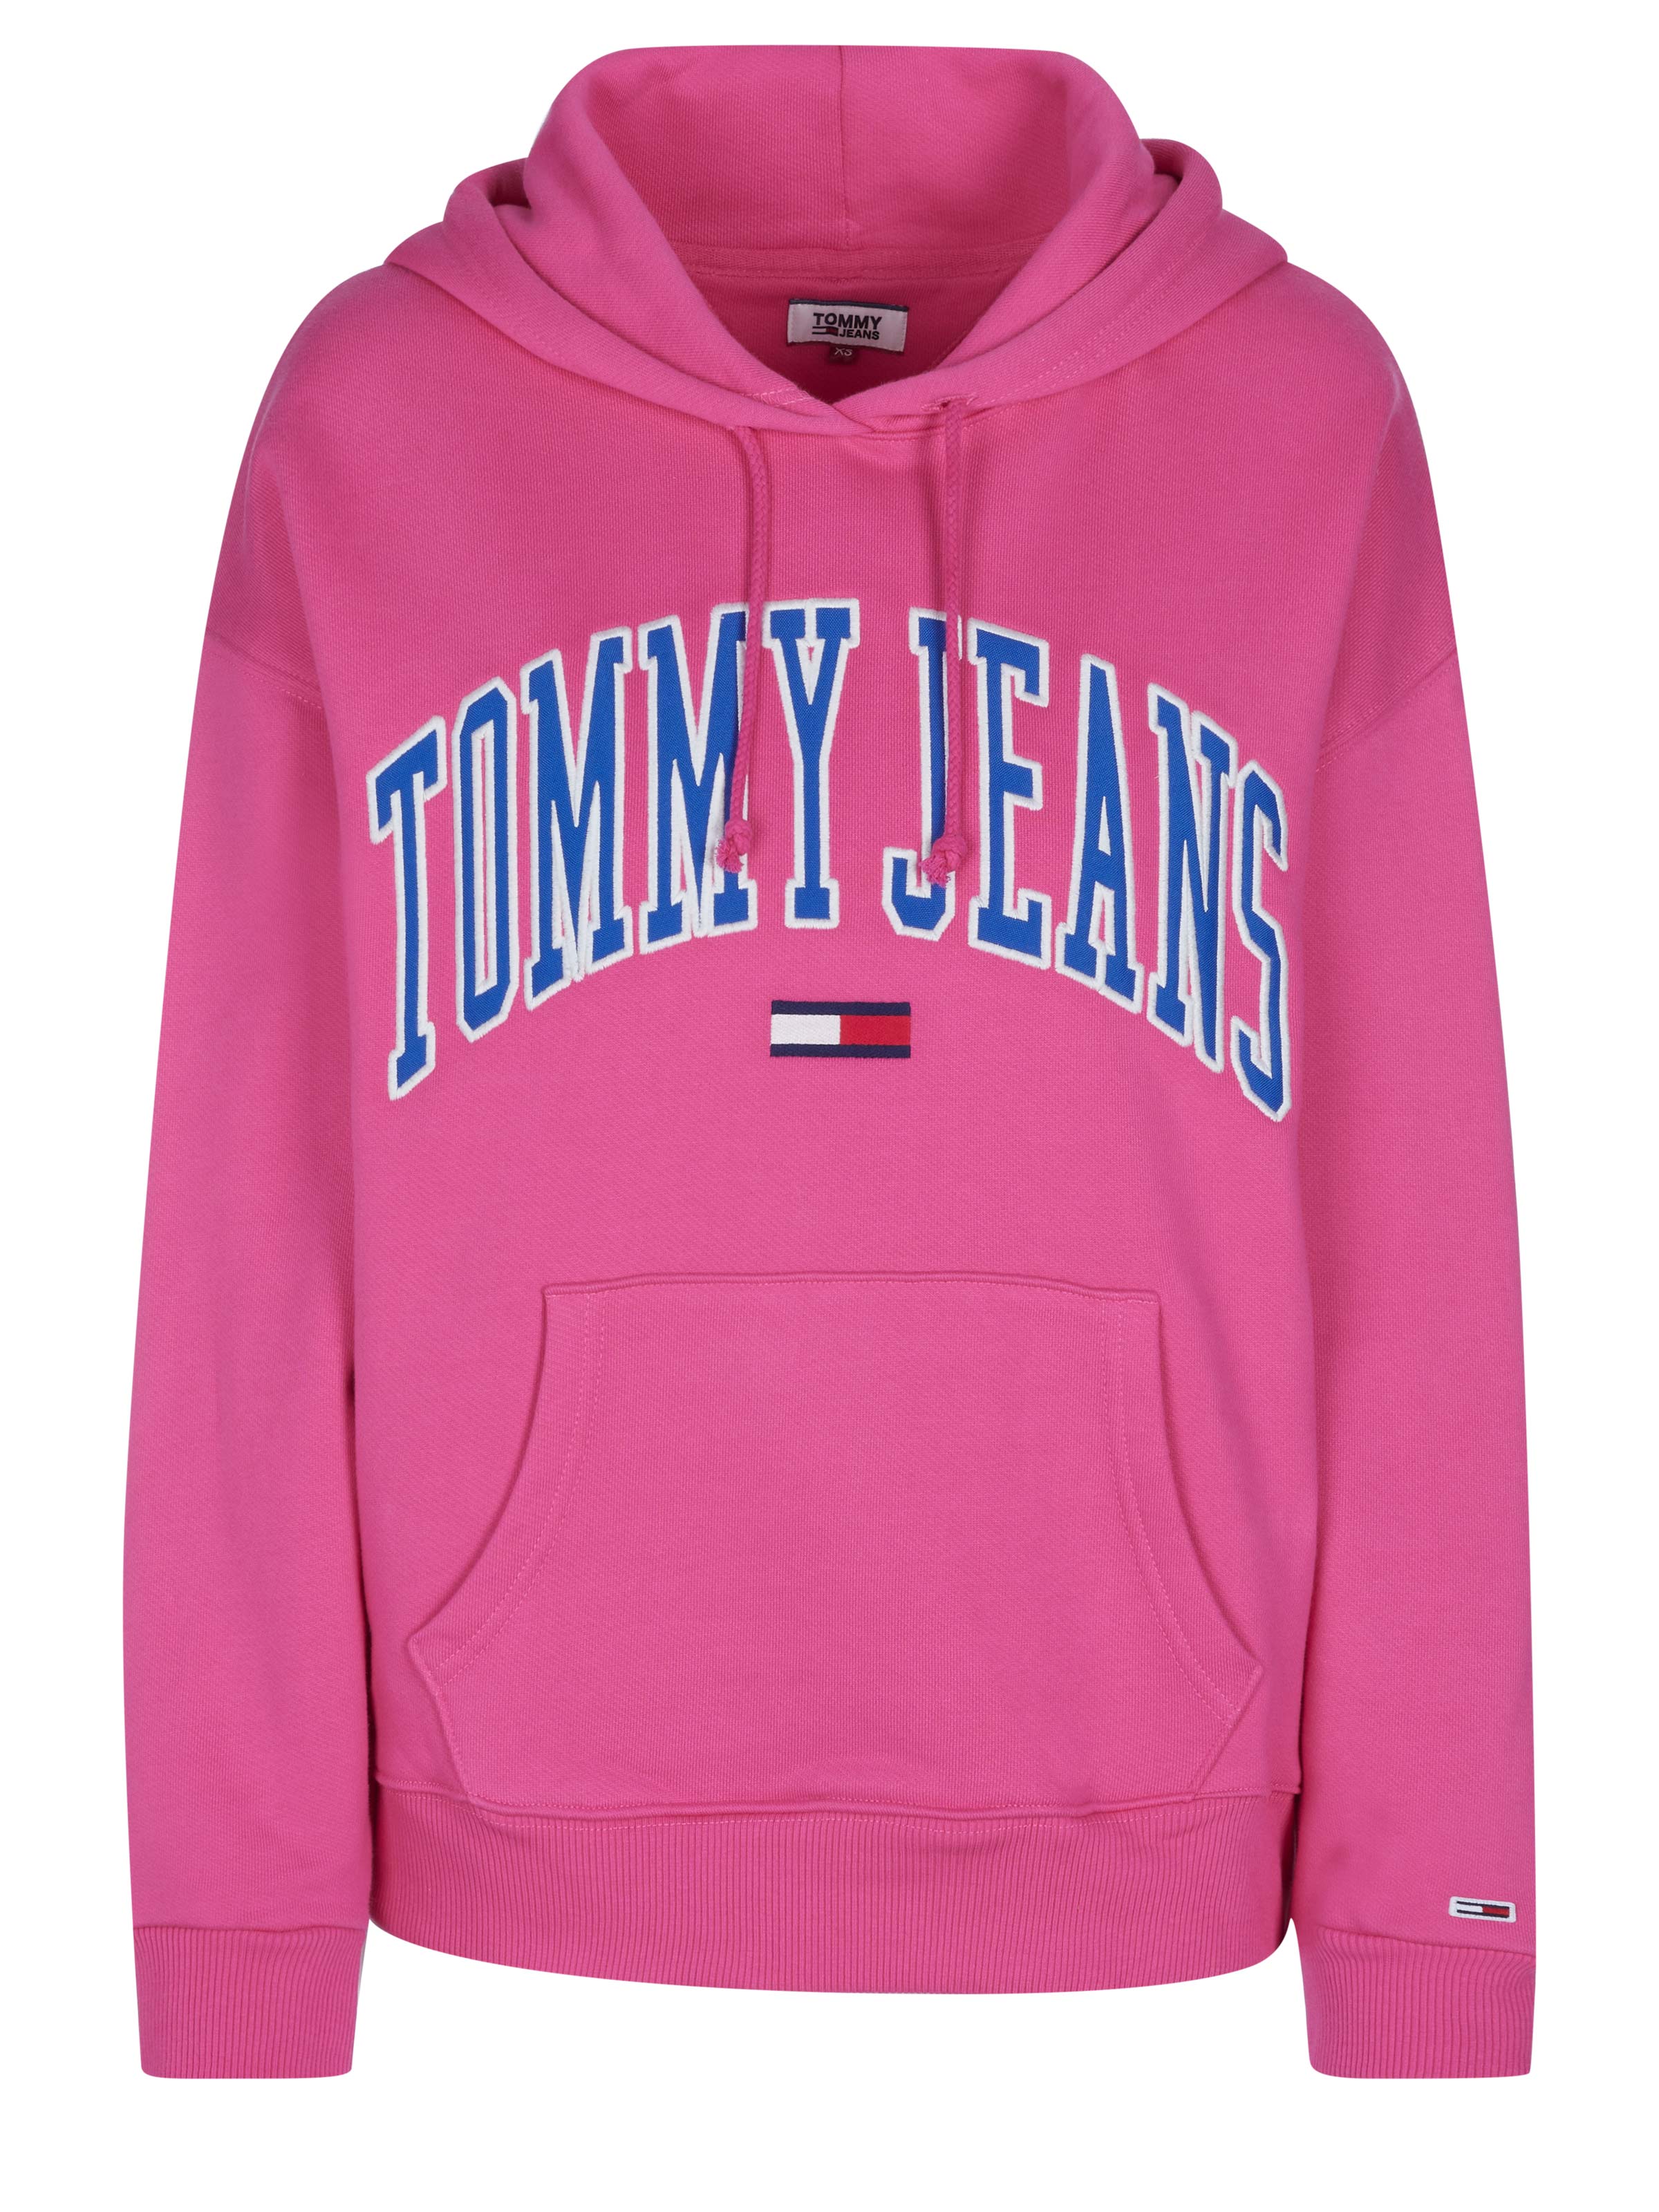 Tommy Hilfiger Jeans Pullover Pink on SALE | Fashionesta